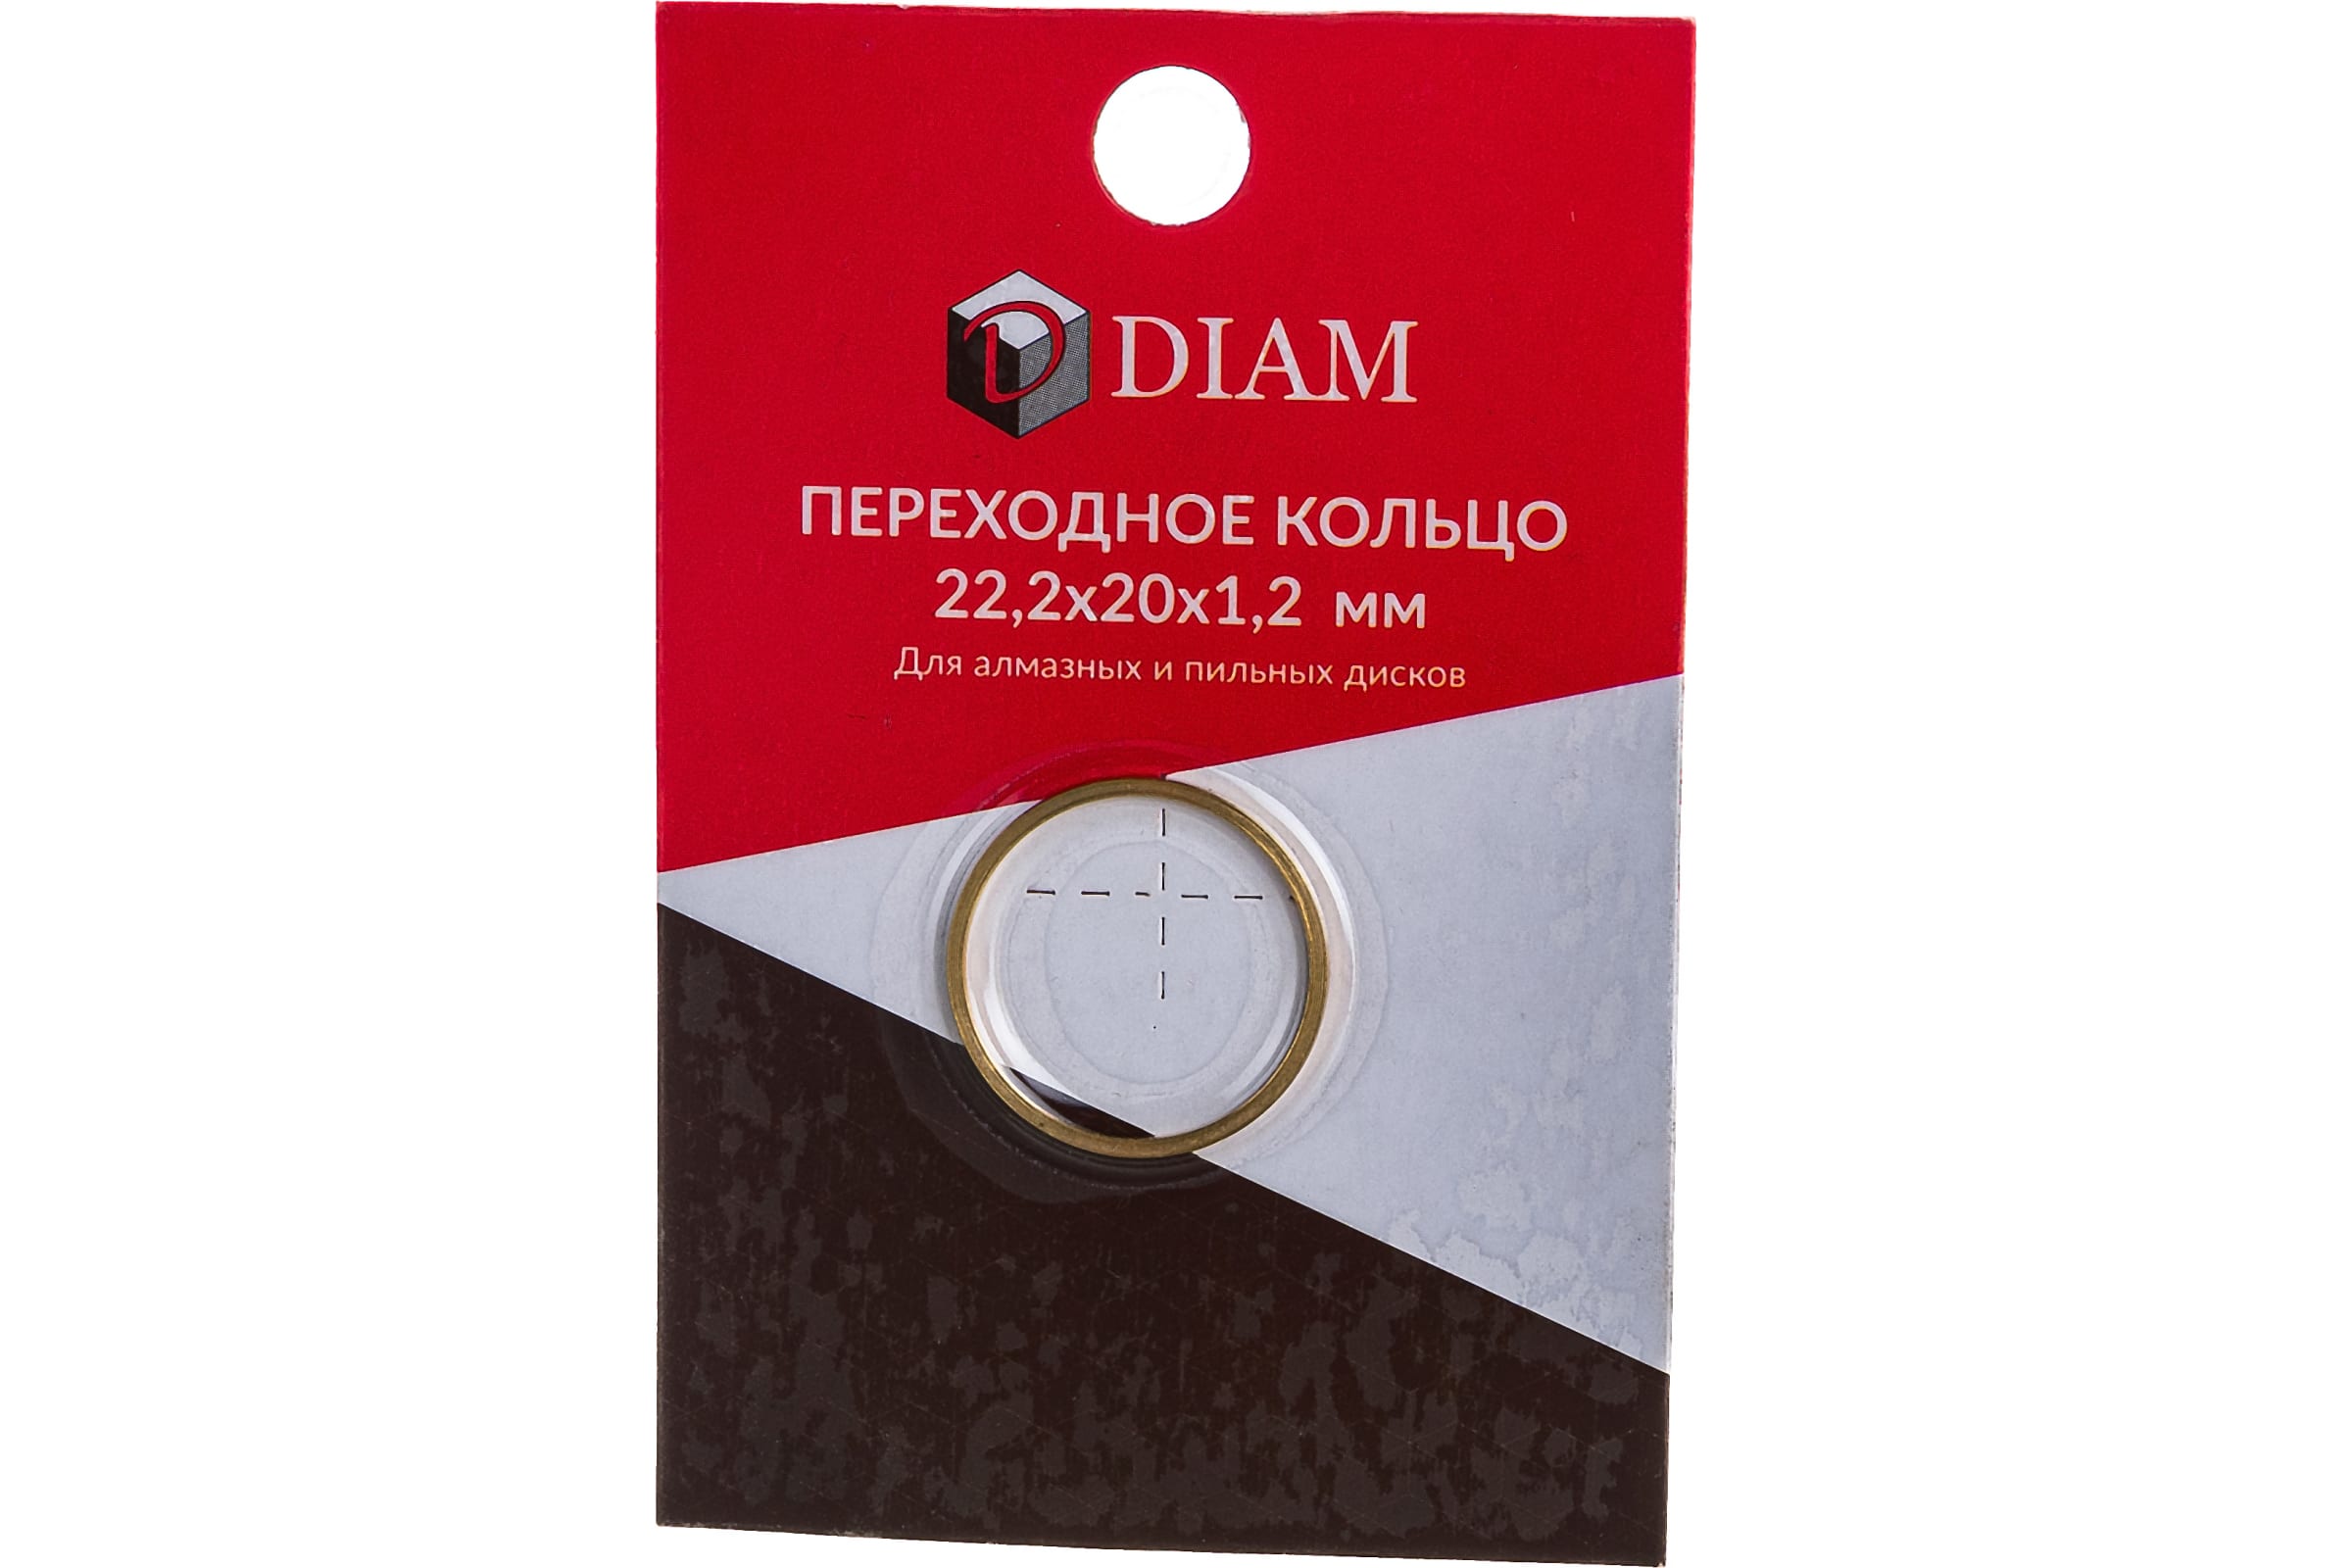 DIAM Переходное кольцо 22,2х20х1,2 640082 кольцо переходное diam 25 4х20х2 0 640083 diam